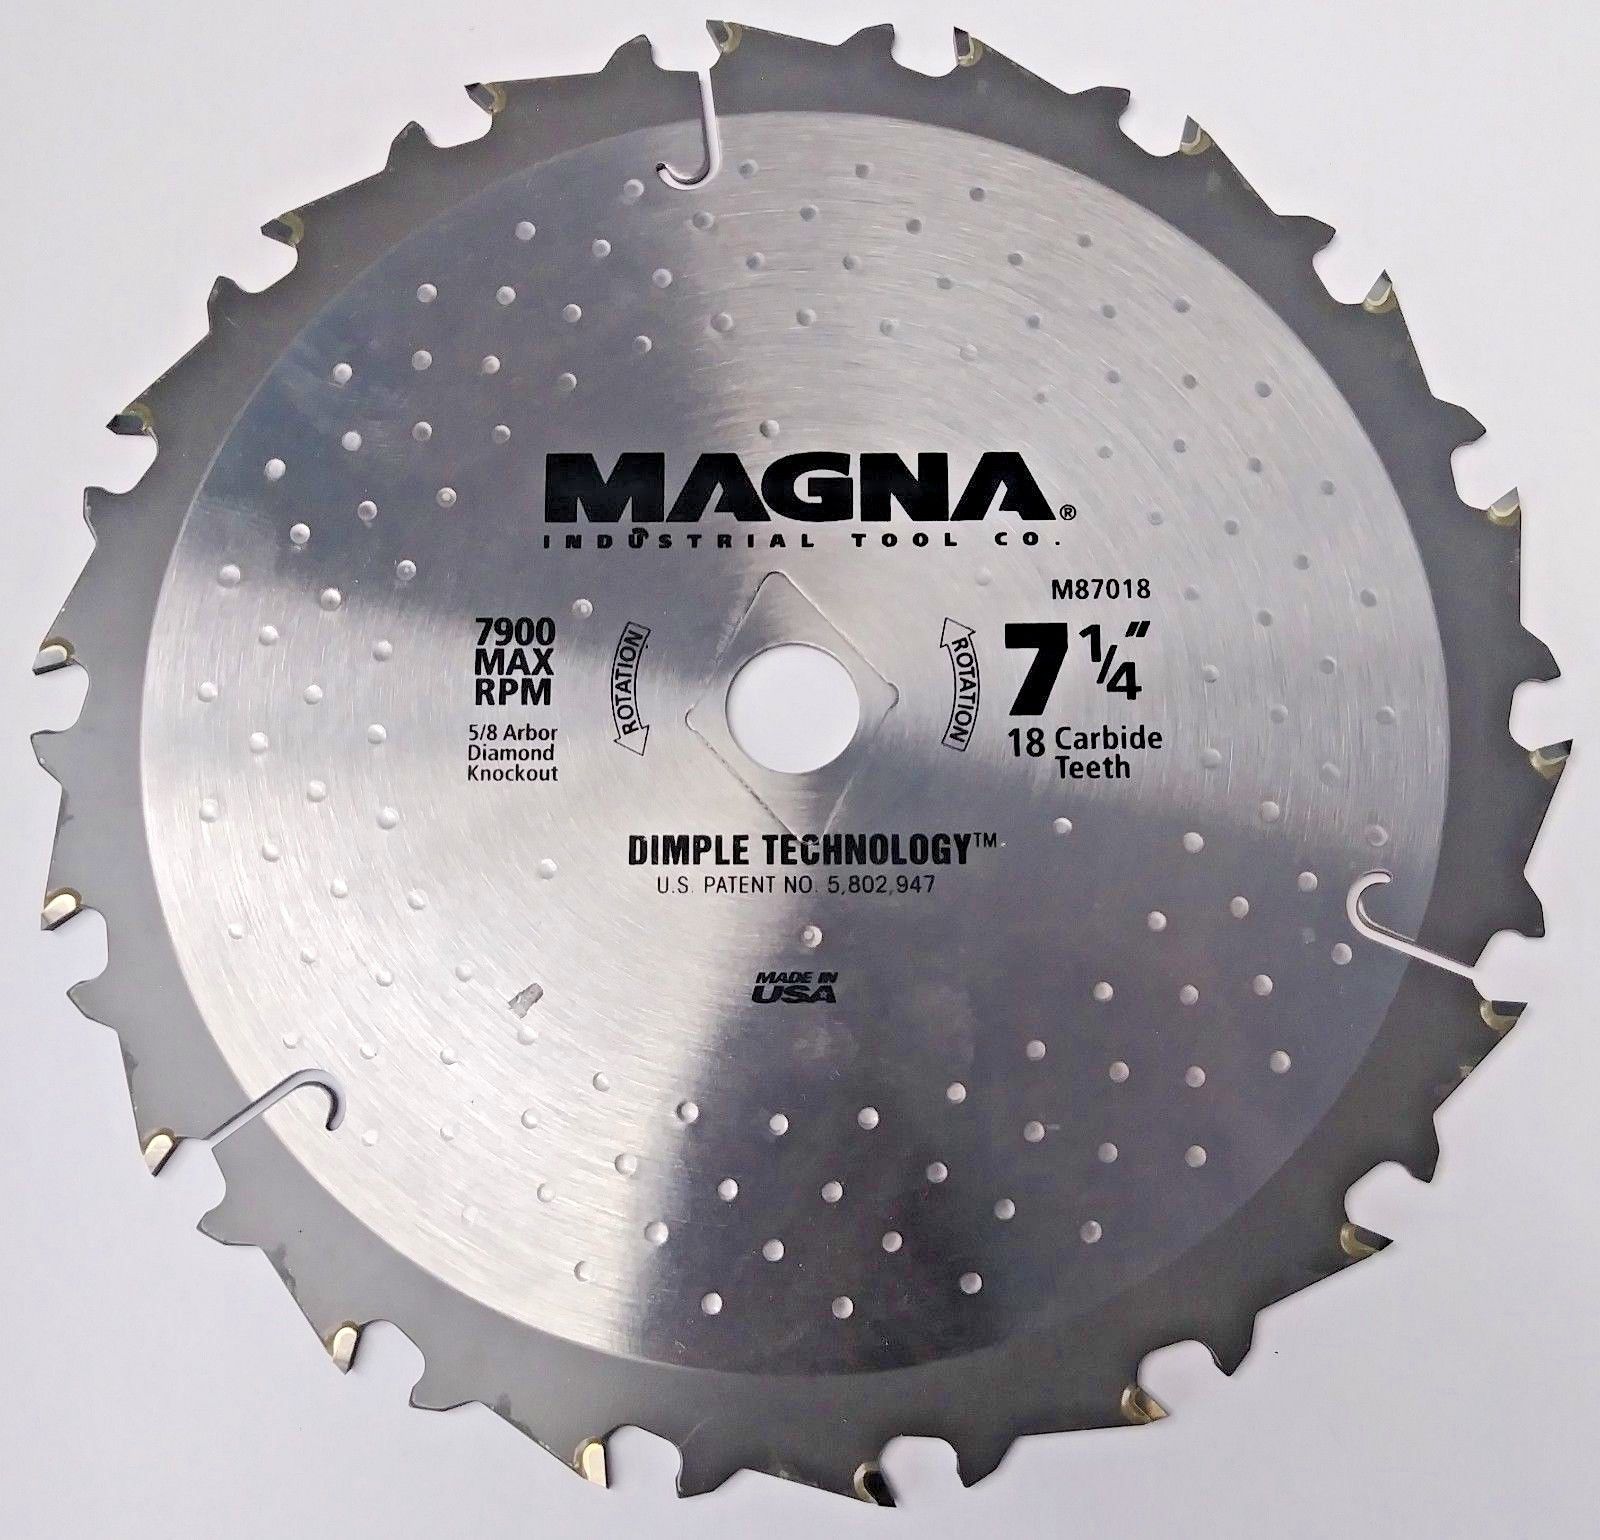 Magna M87018 7-1/4" x 18 Carbide Teeth With 5/8" Arbor Diamond Knockout USA